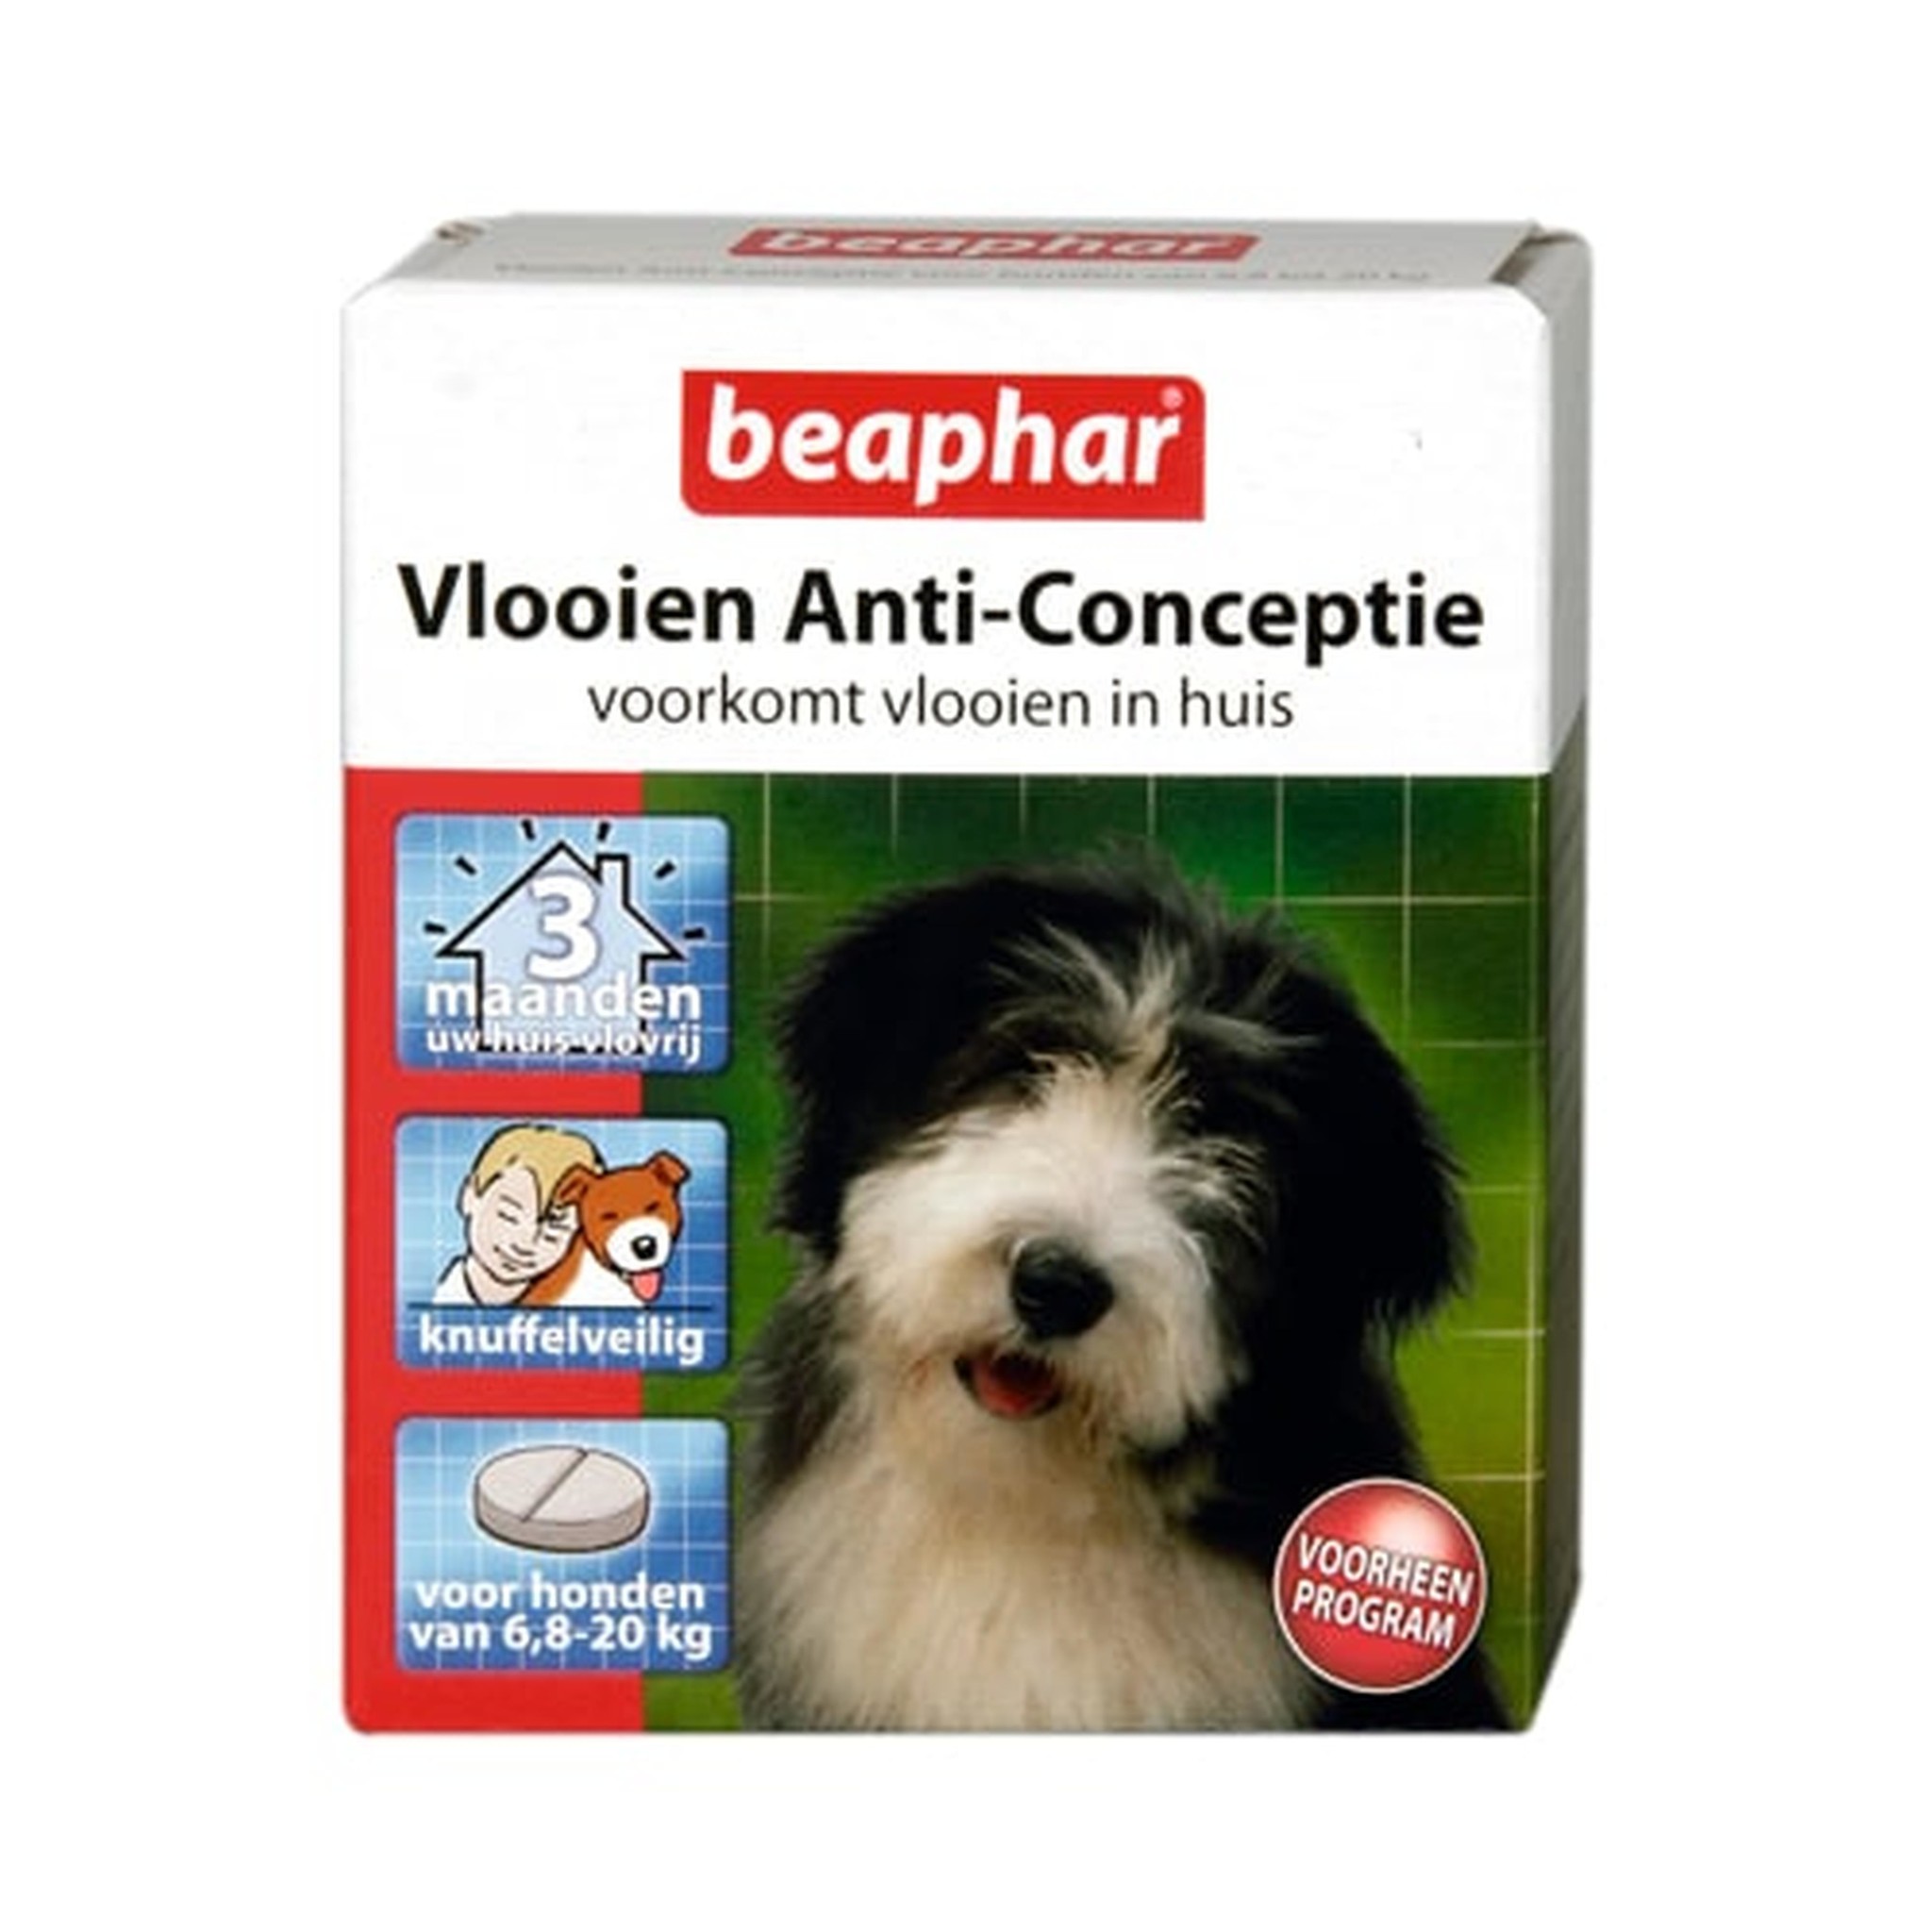 Discreet Sada Superioriteit Vlooien anti conceptie hond medium 3 tabletten - Beaphar - Webwinkel voor  vijver, aquarium en huisdieren | Beest.nl